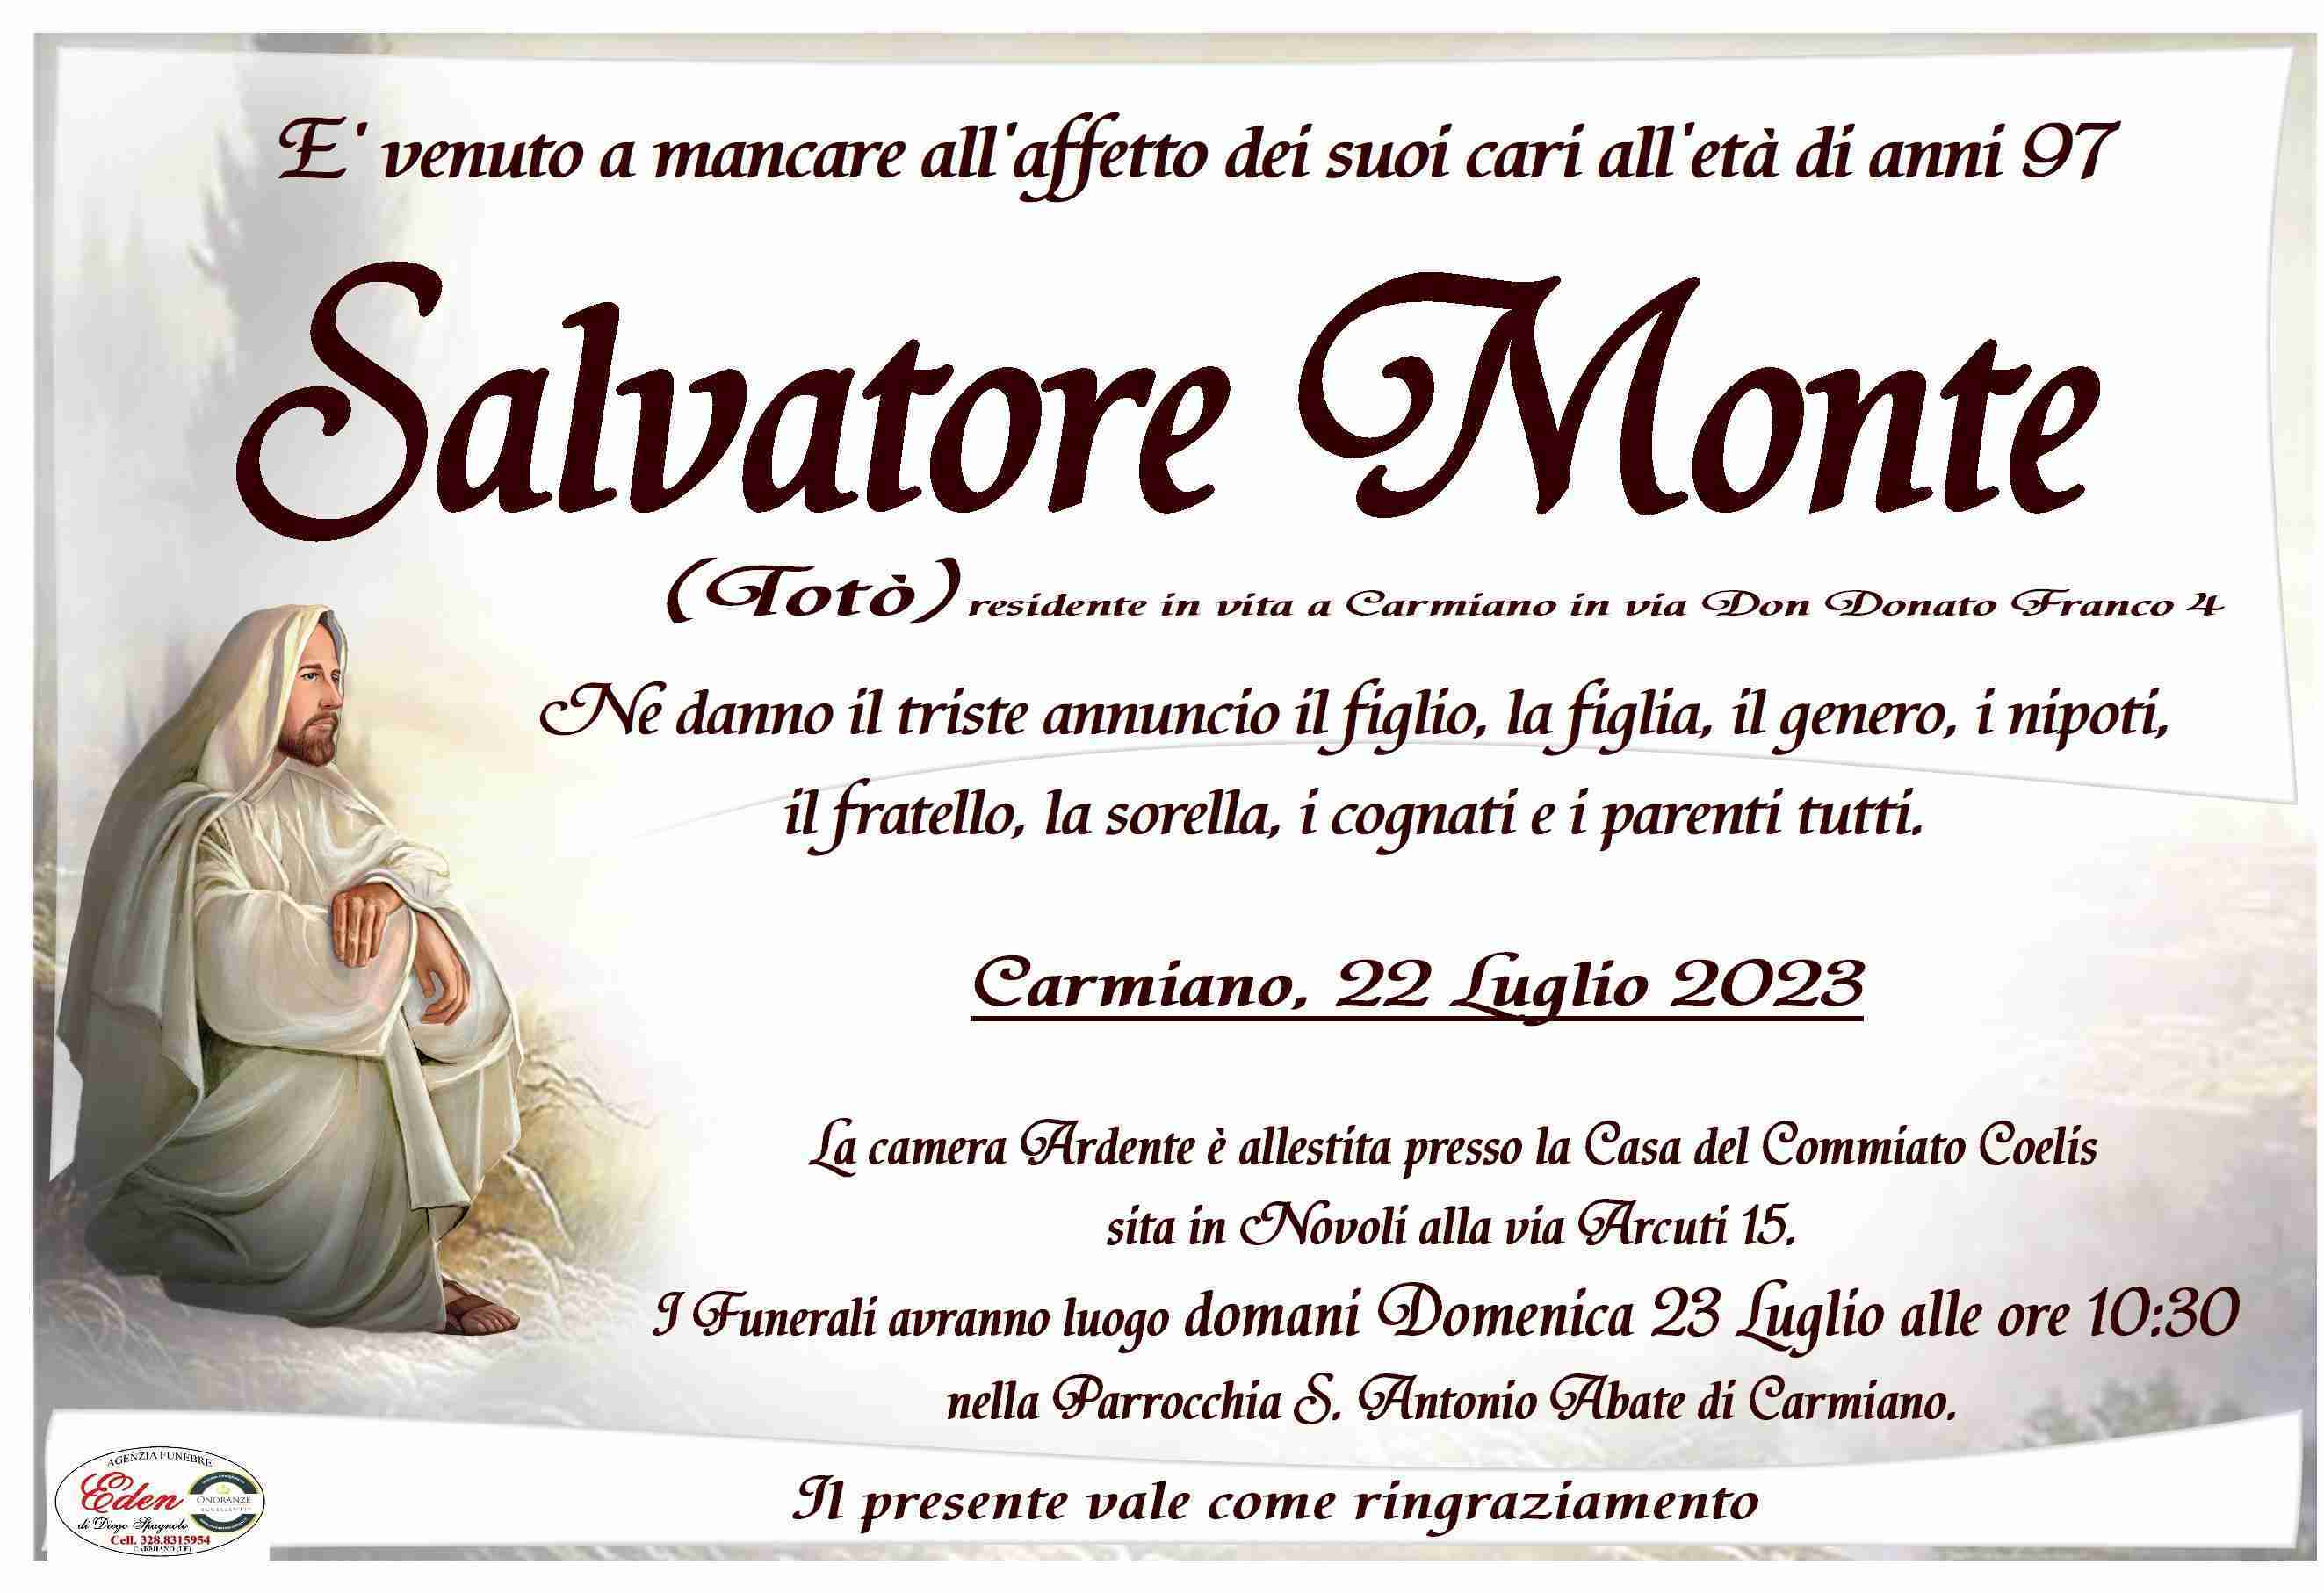 Salvatore Monte